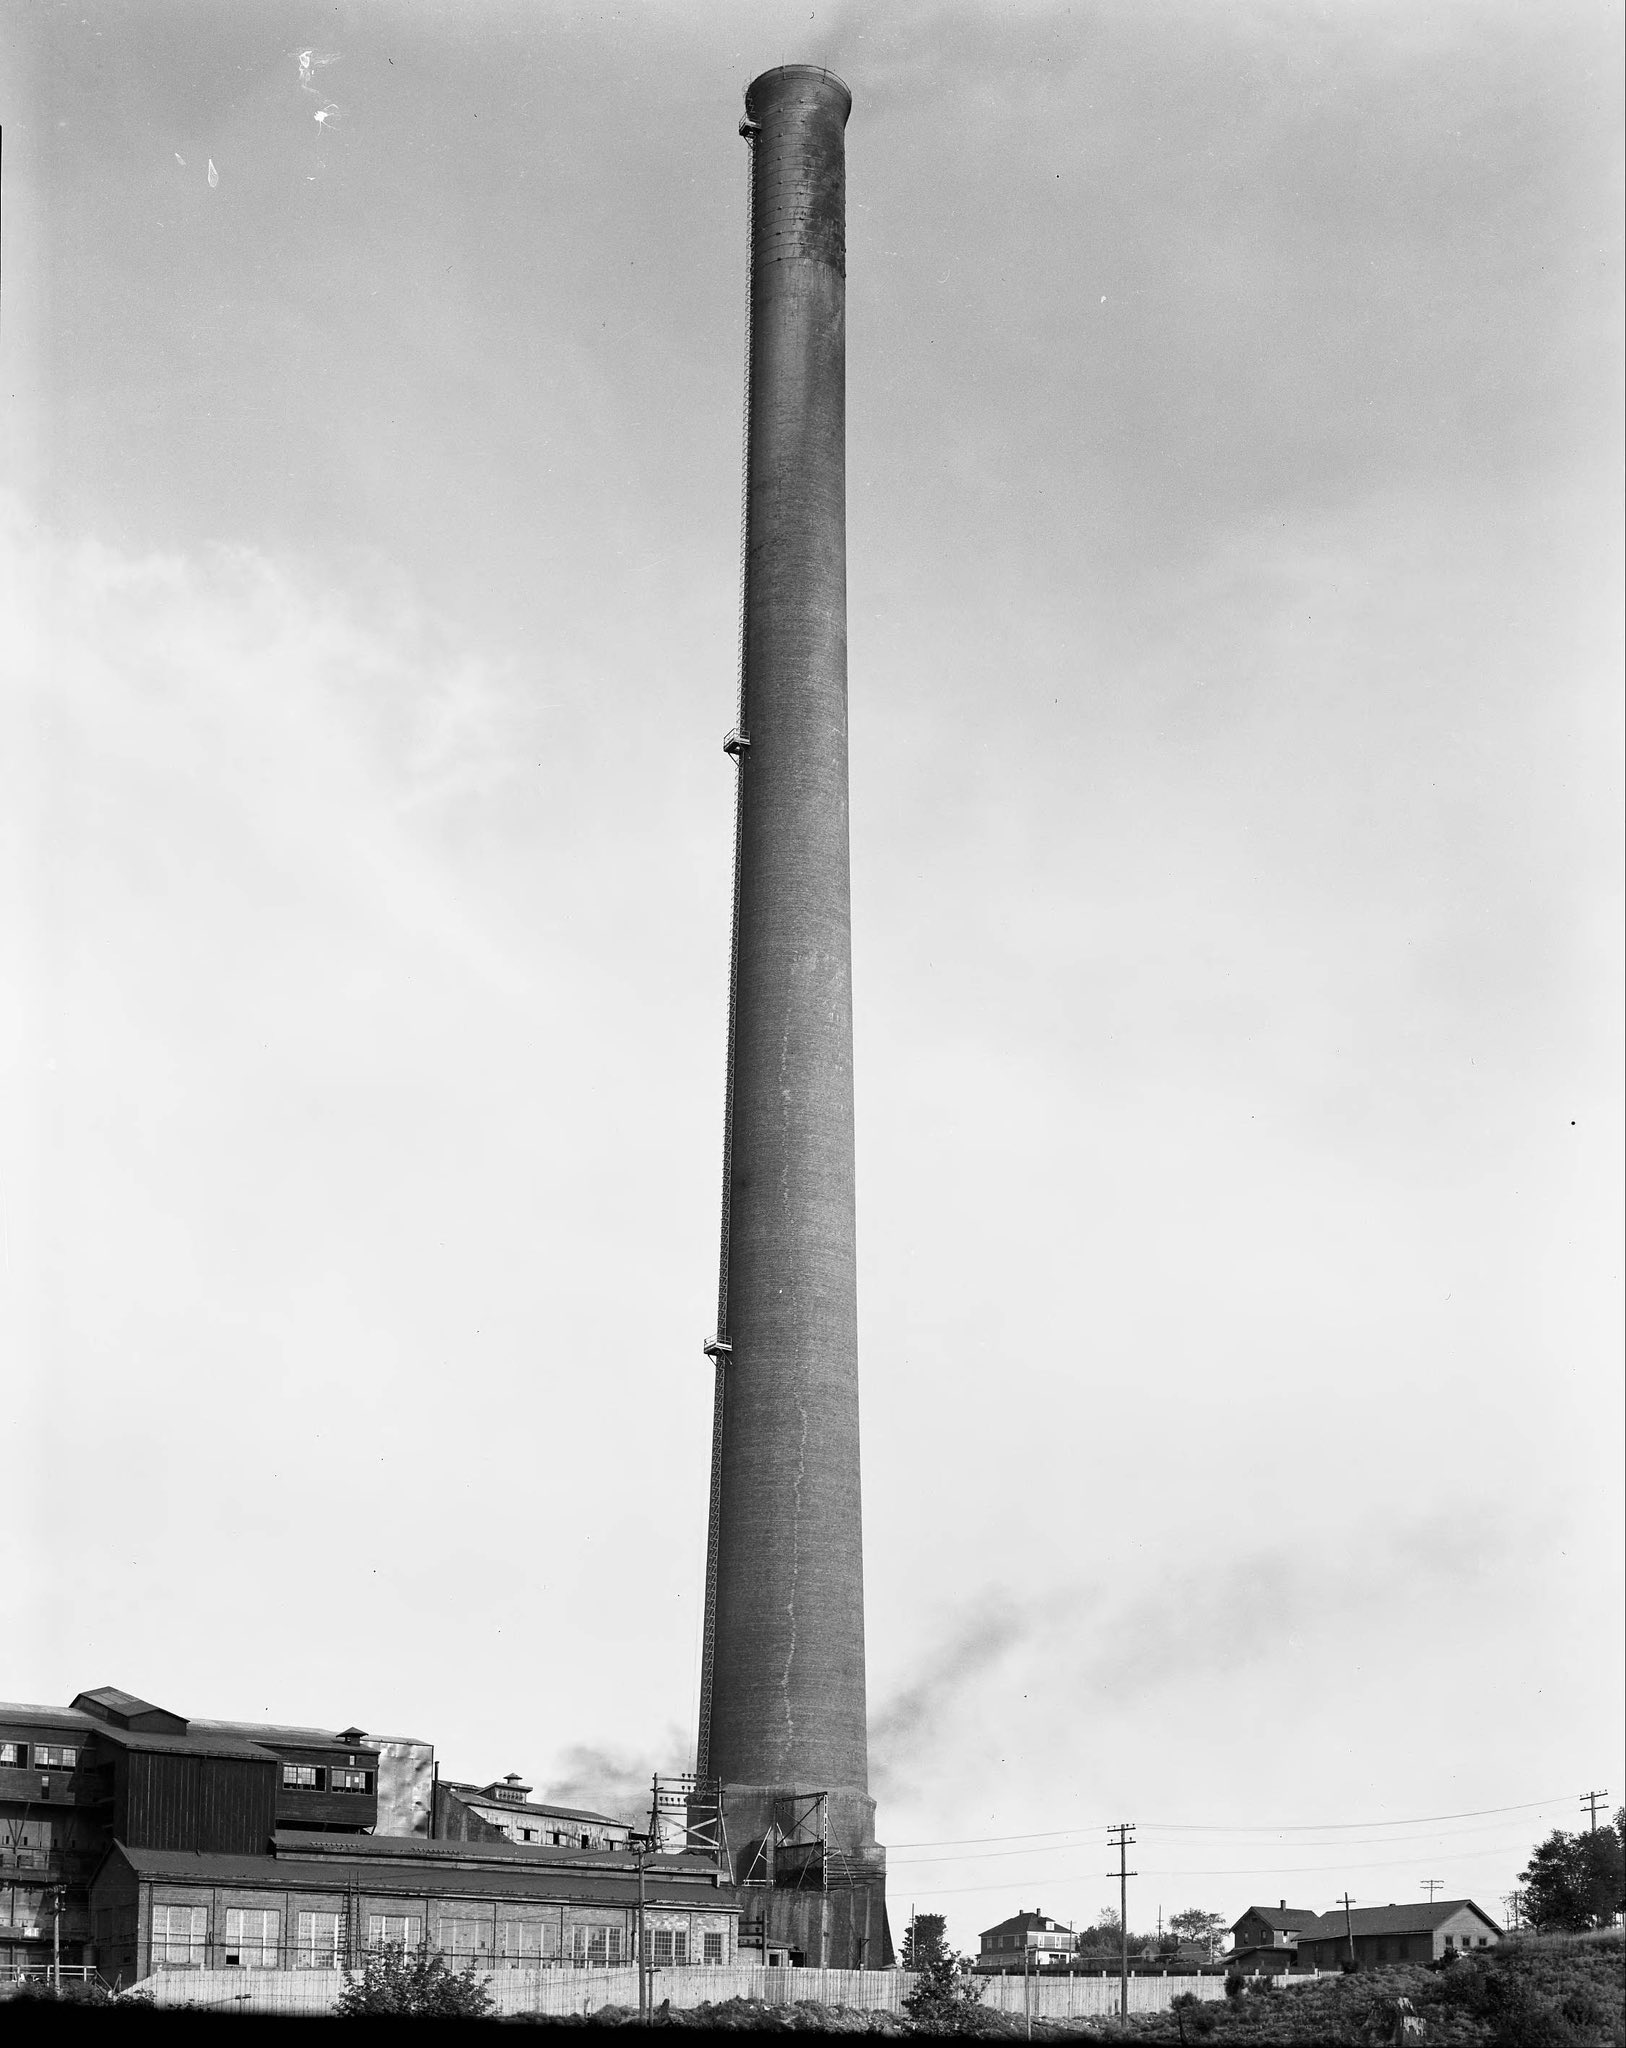 The smokestack in 1935, photo courtesy of the Tacoma Public Library.